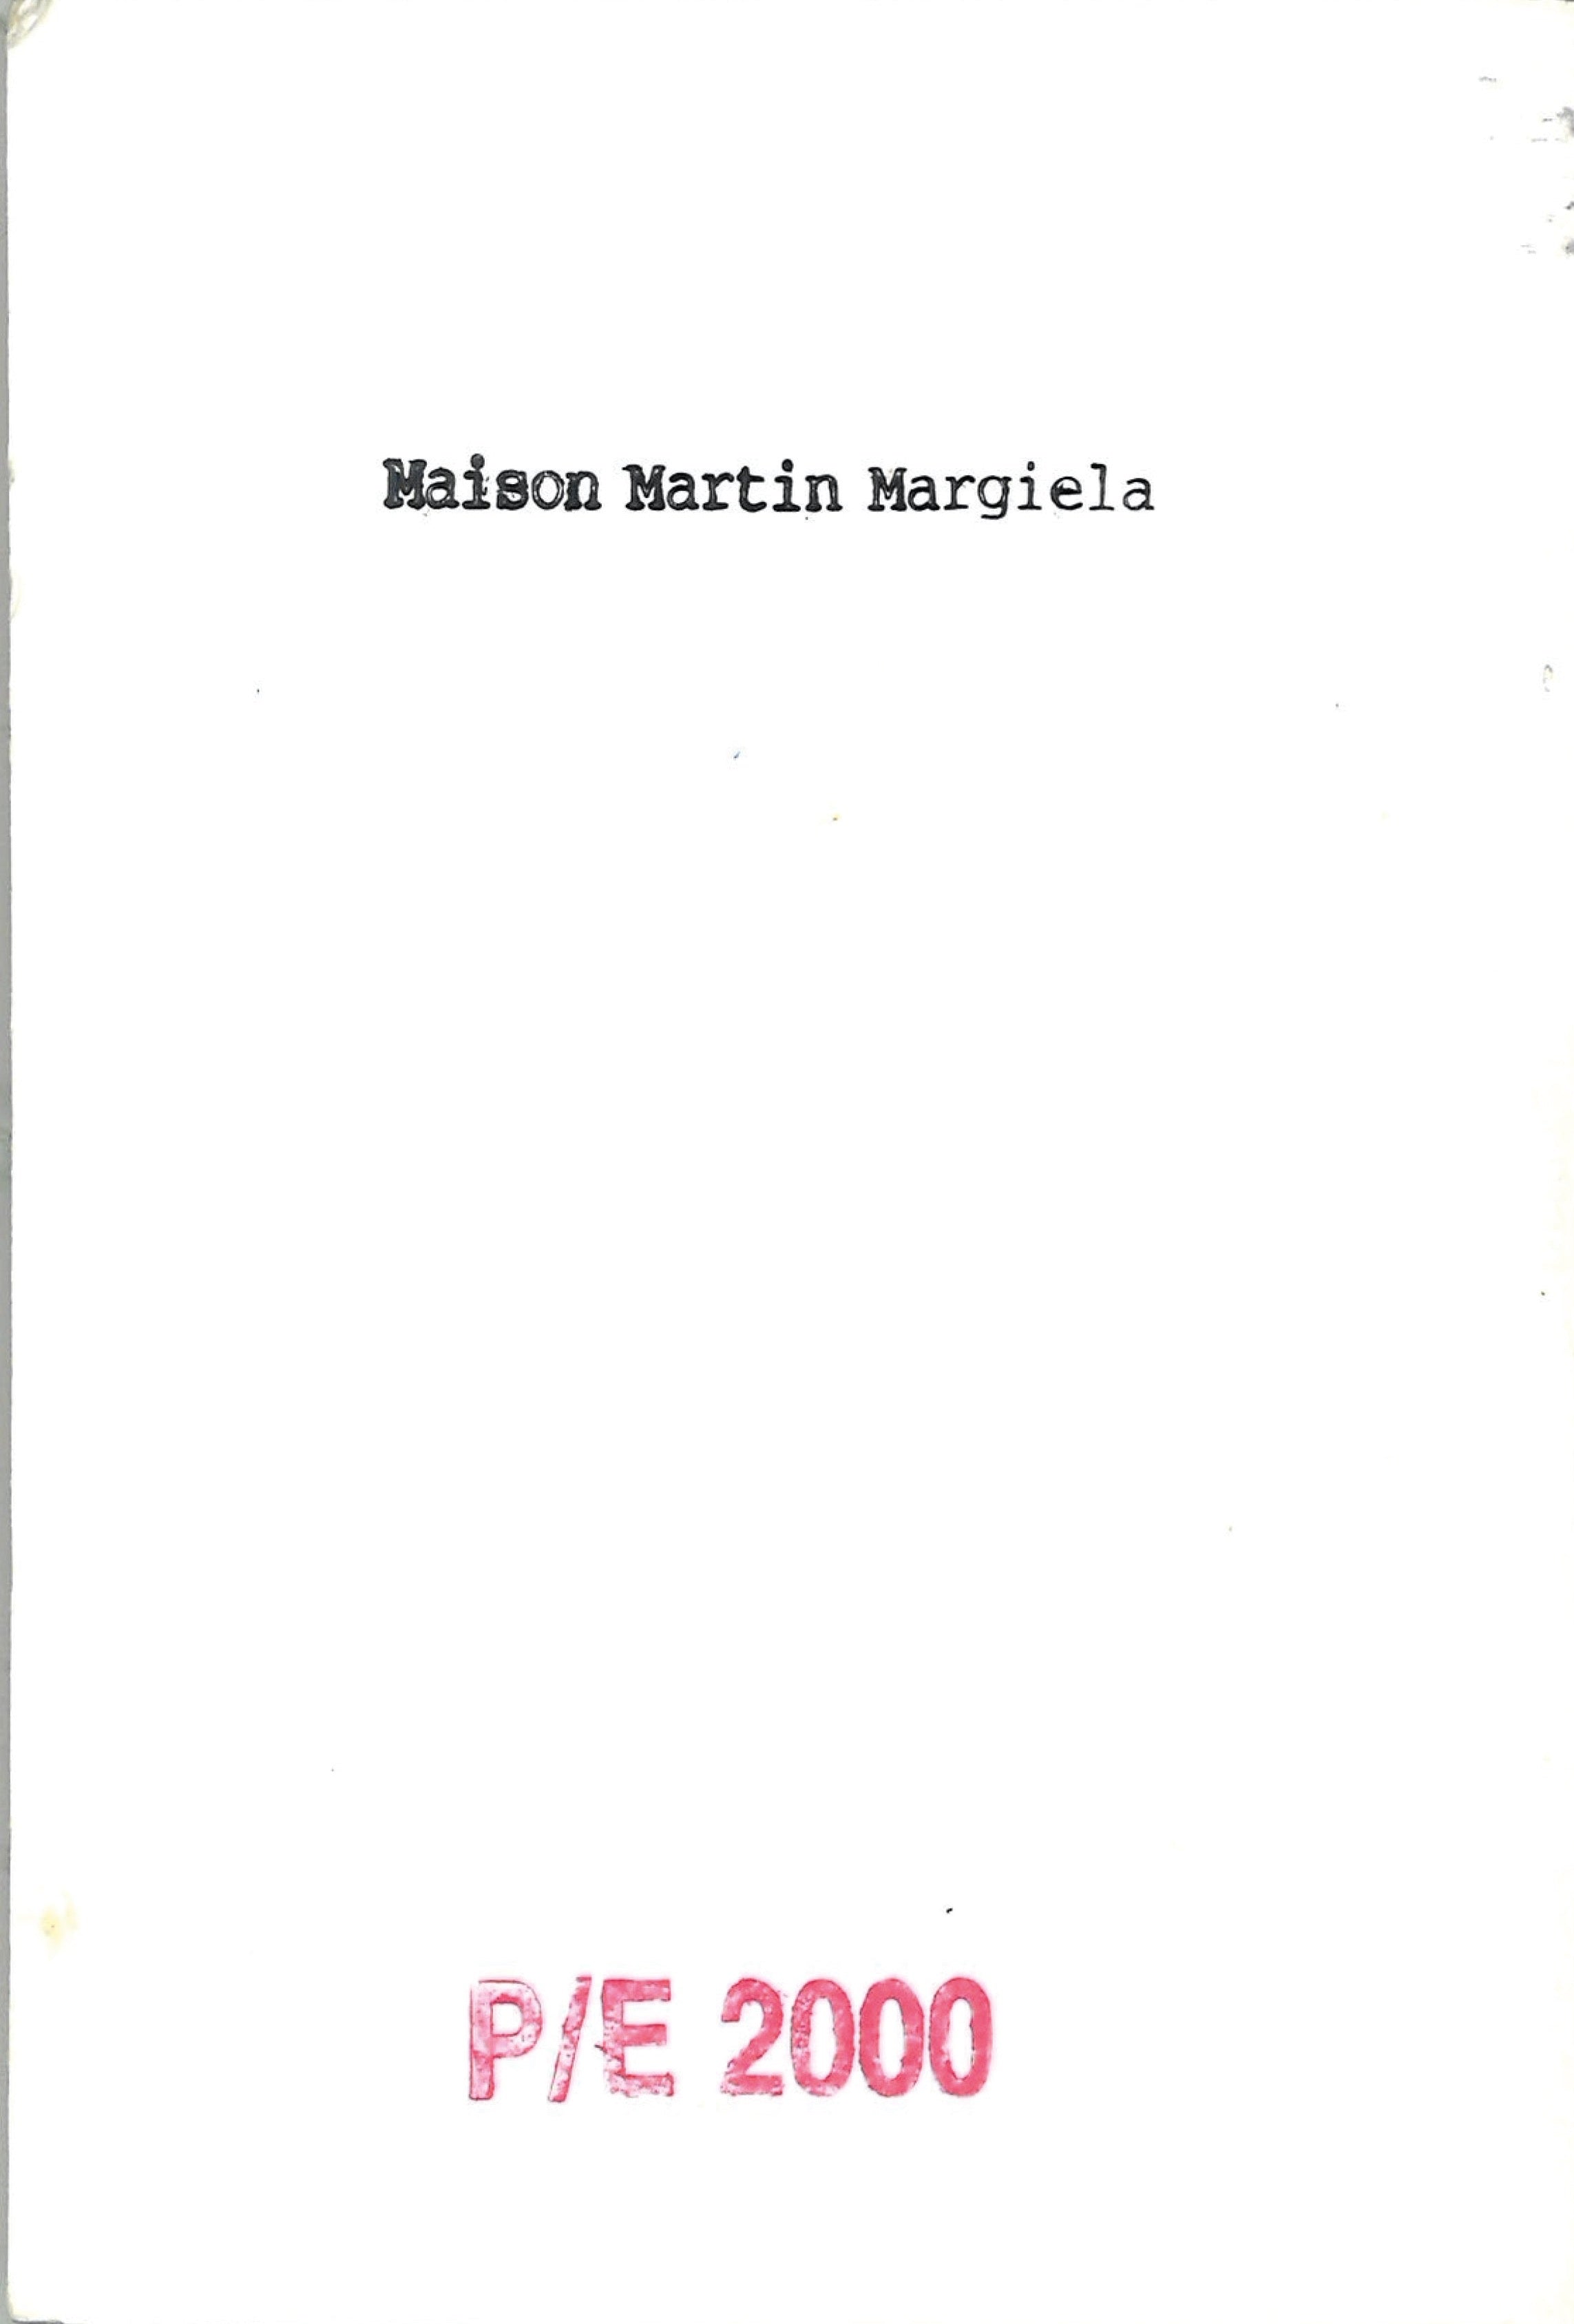 Maison Martin Margiela Lookbook
Womenswear Collection Spring/Summer 2000